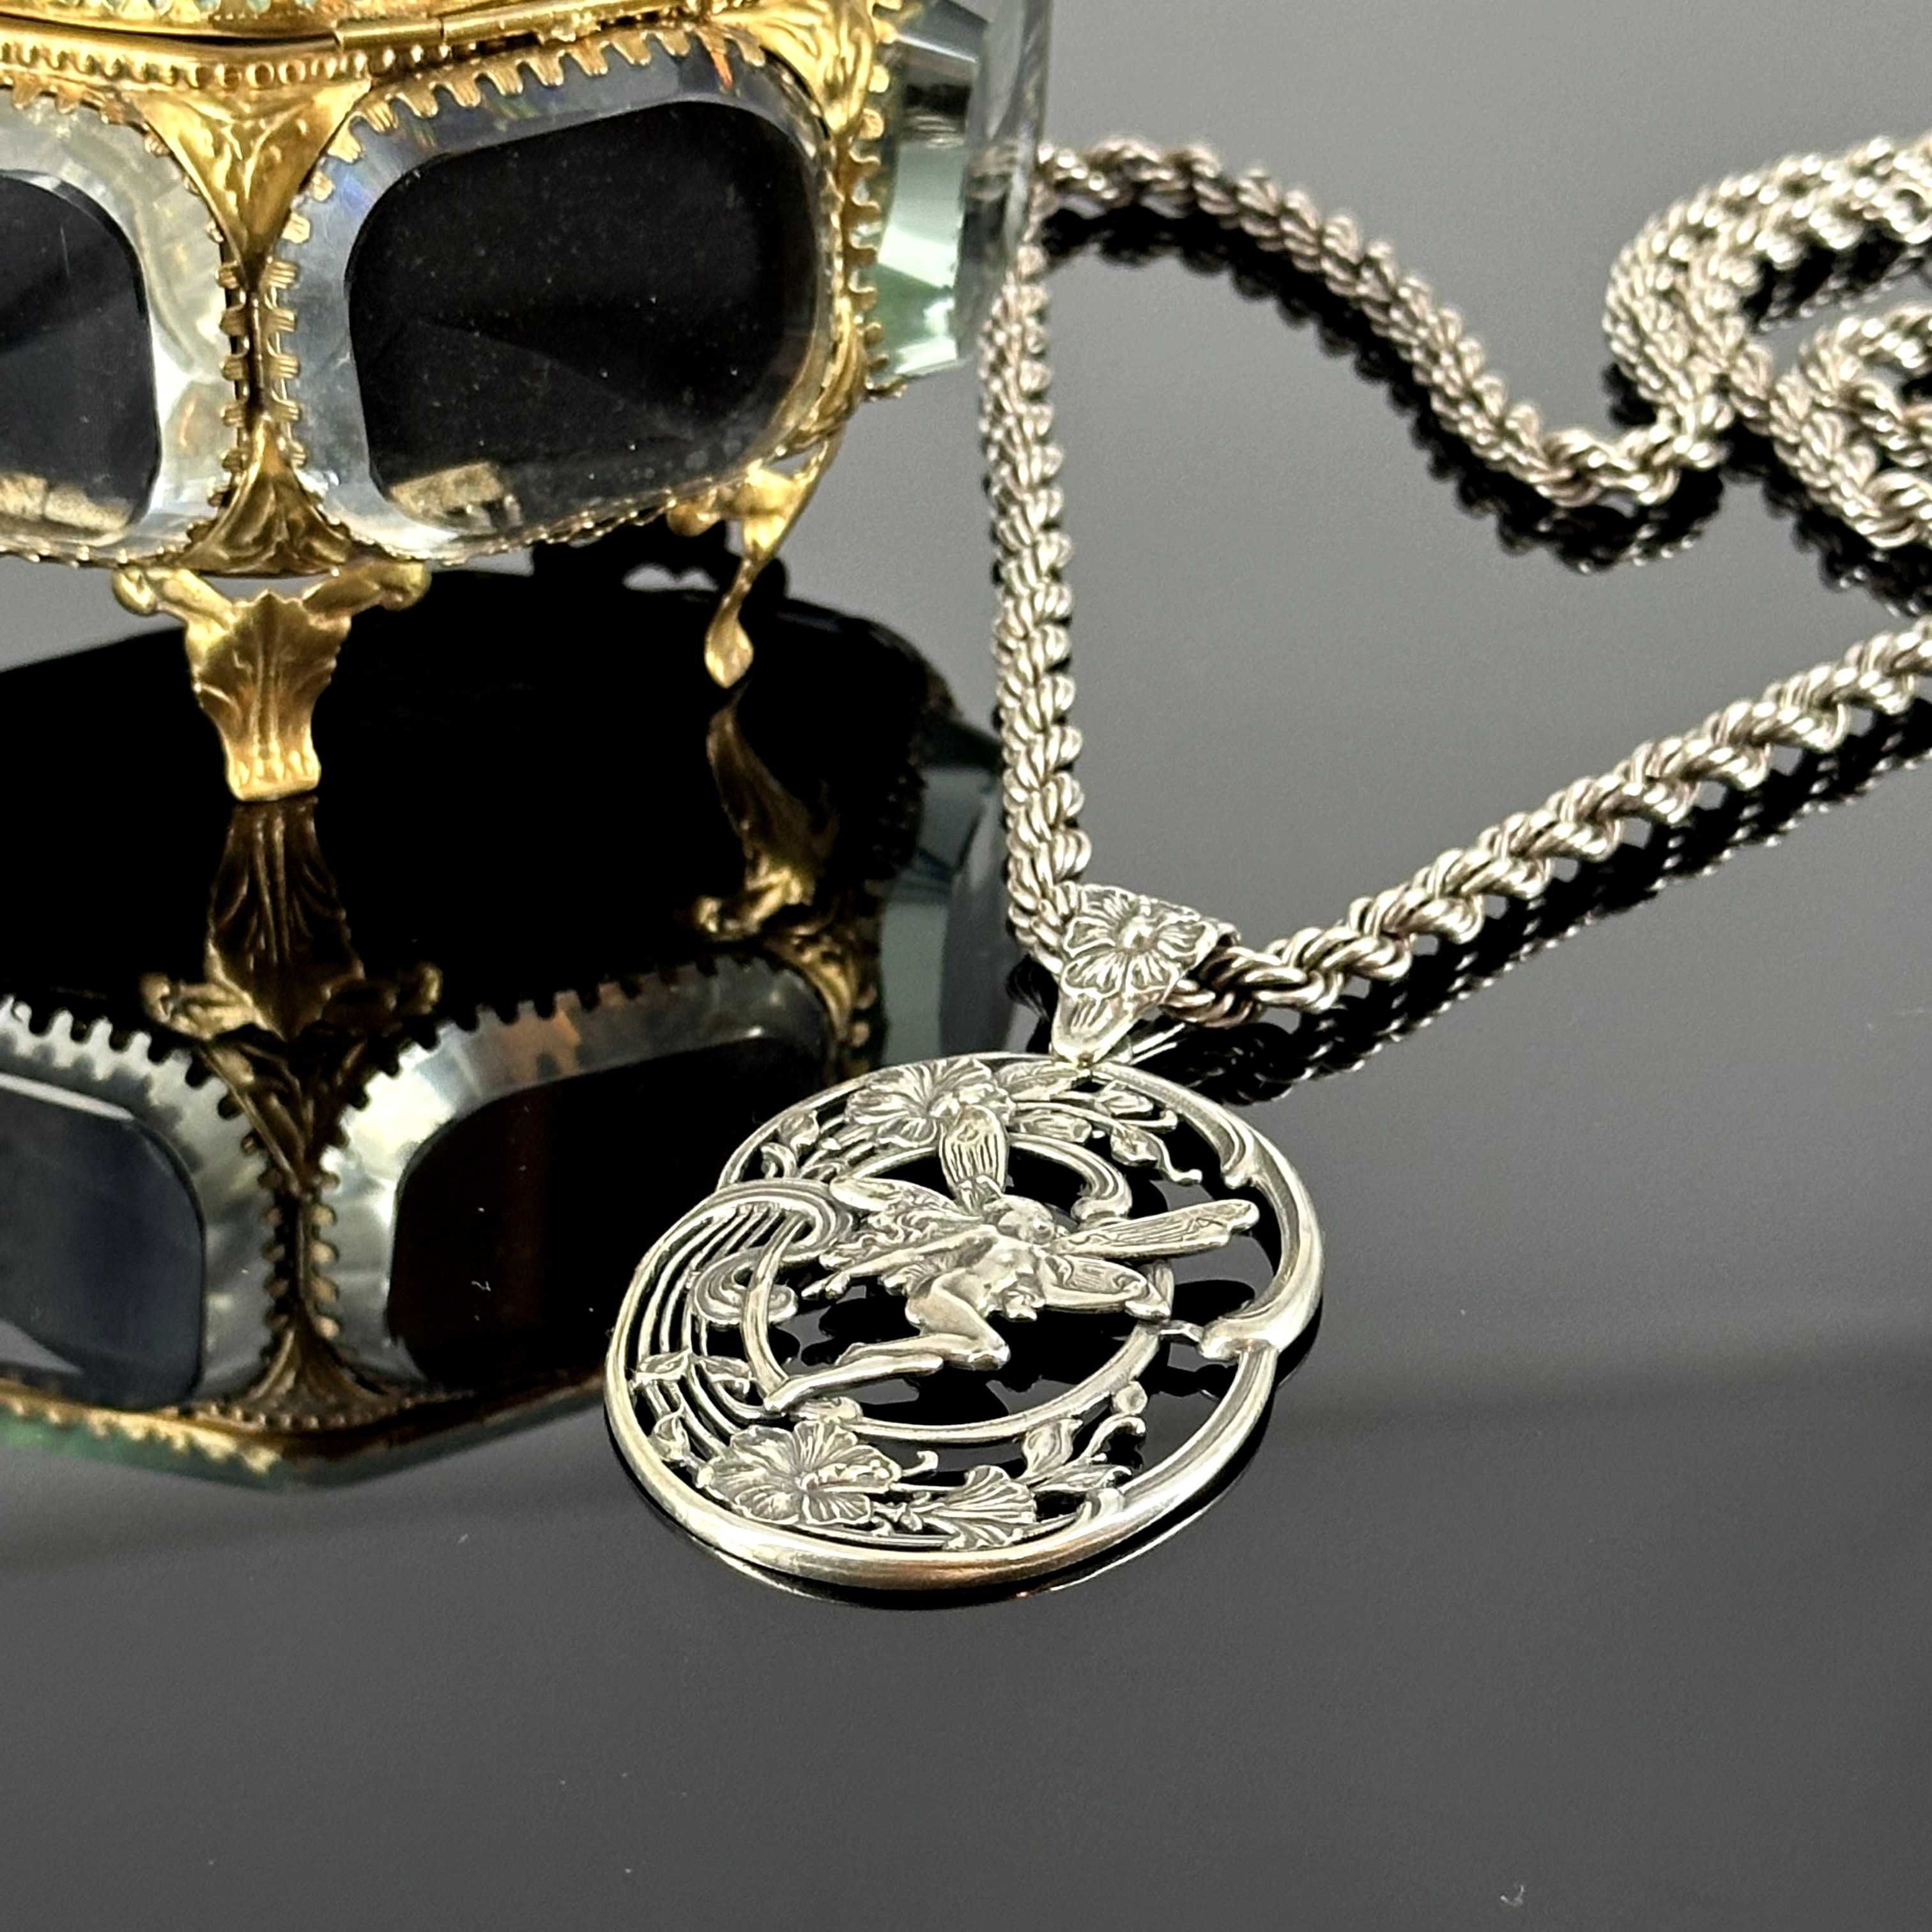 Srebro - Wielki srebrny naszyjnik secesyjny - próba srebra 835